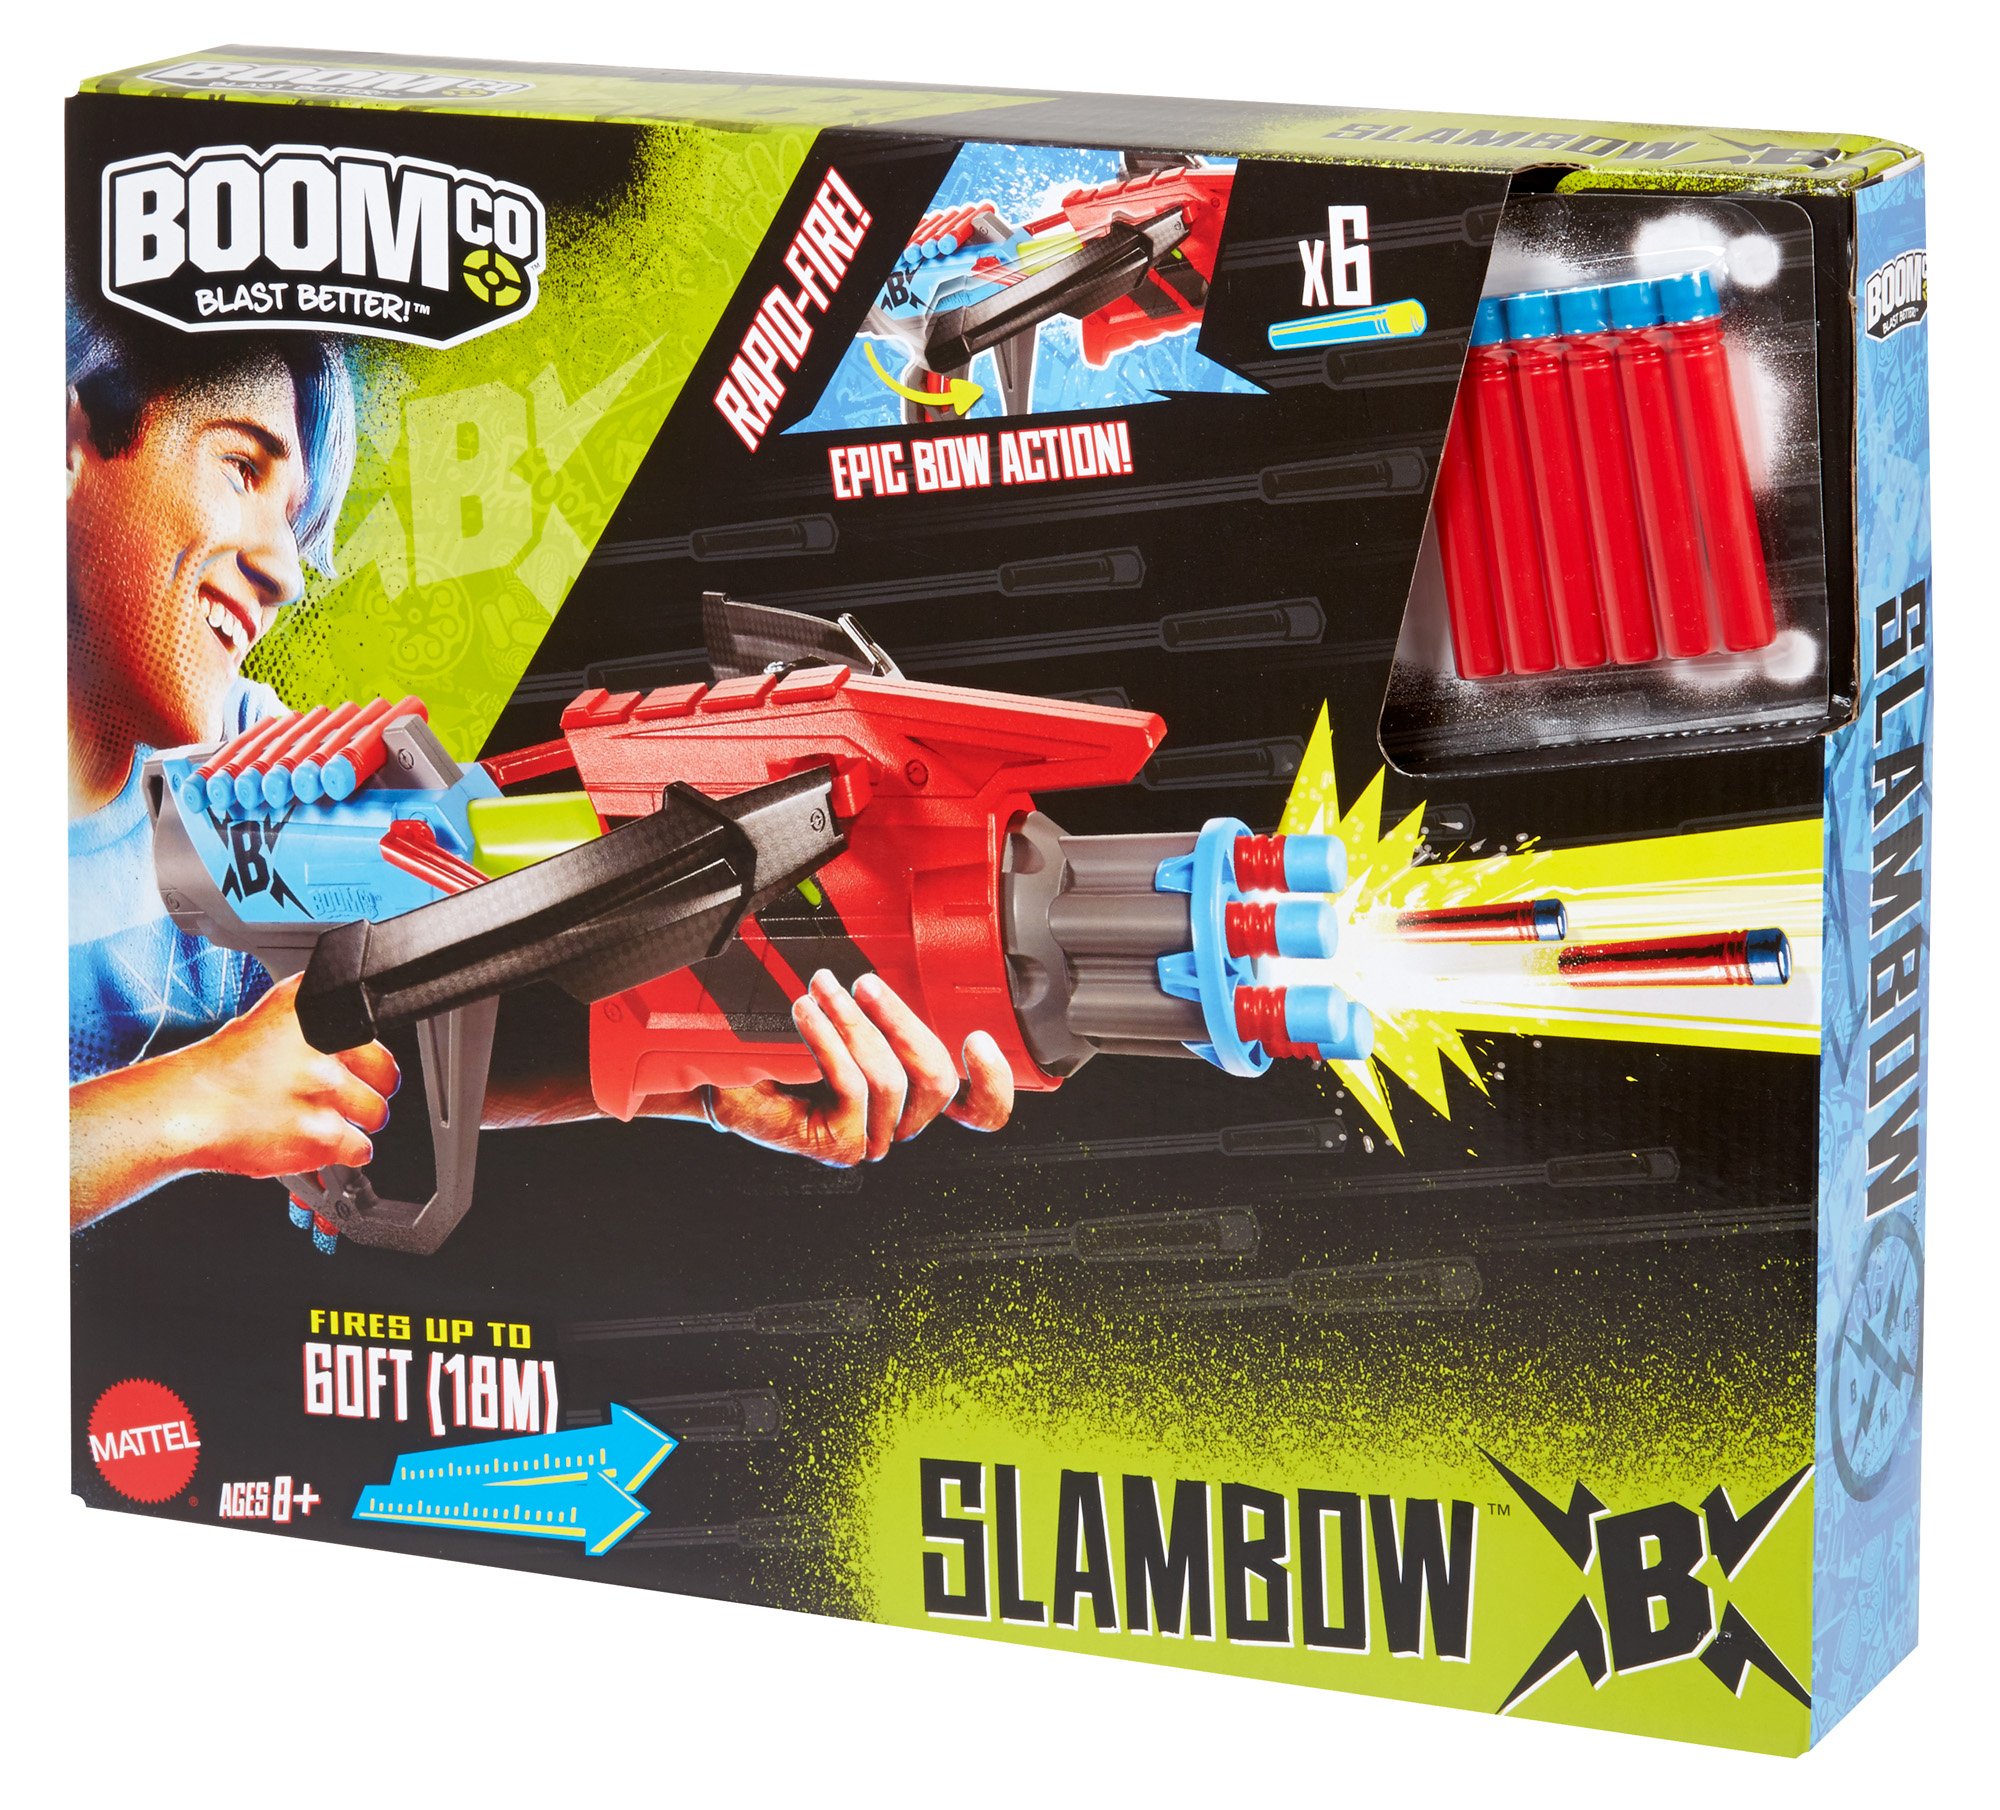 Slambow Boomco Mattel